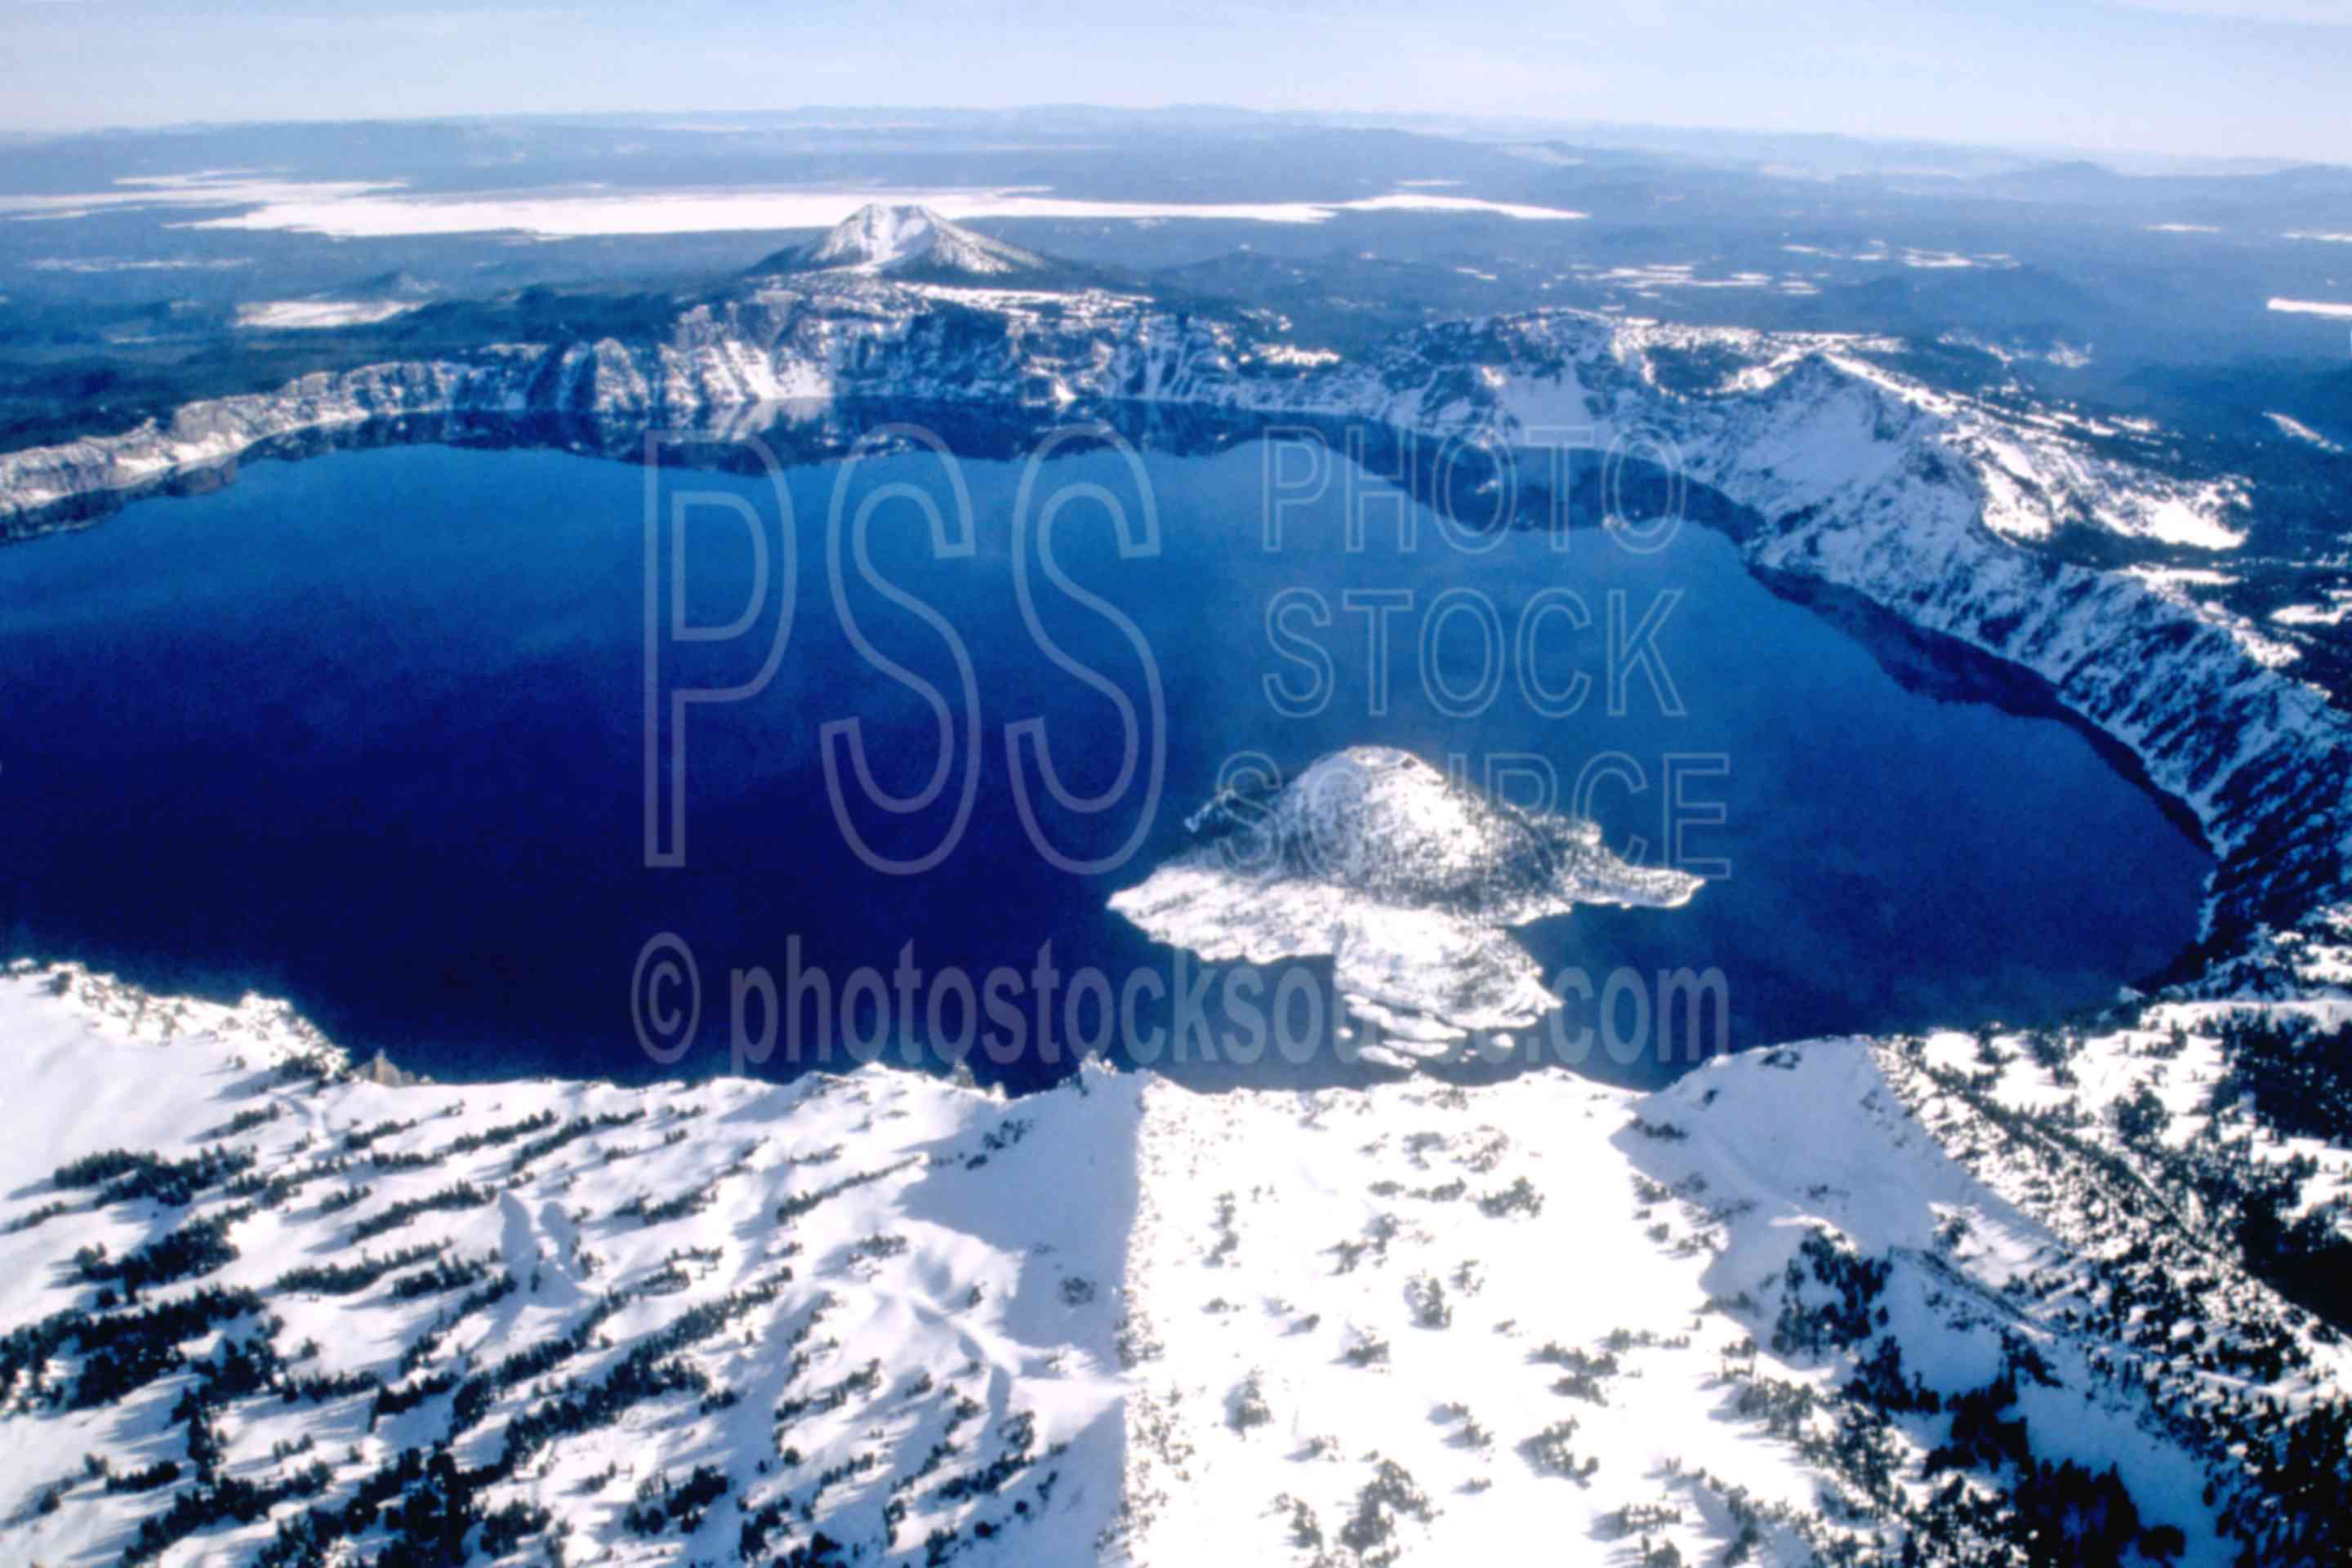 Crater Lake from North,wizard island,caldera,usas,lakes rivers,national park,nature